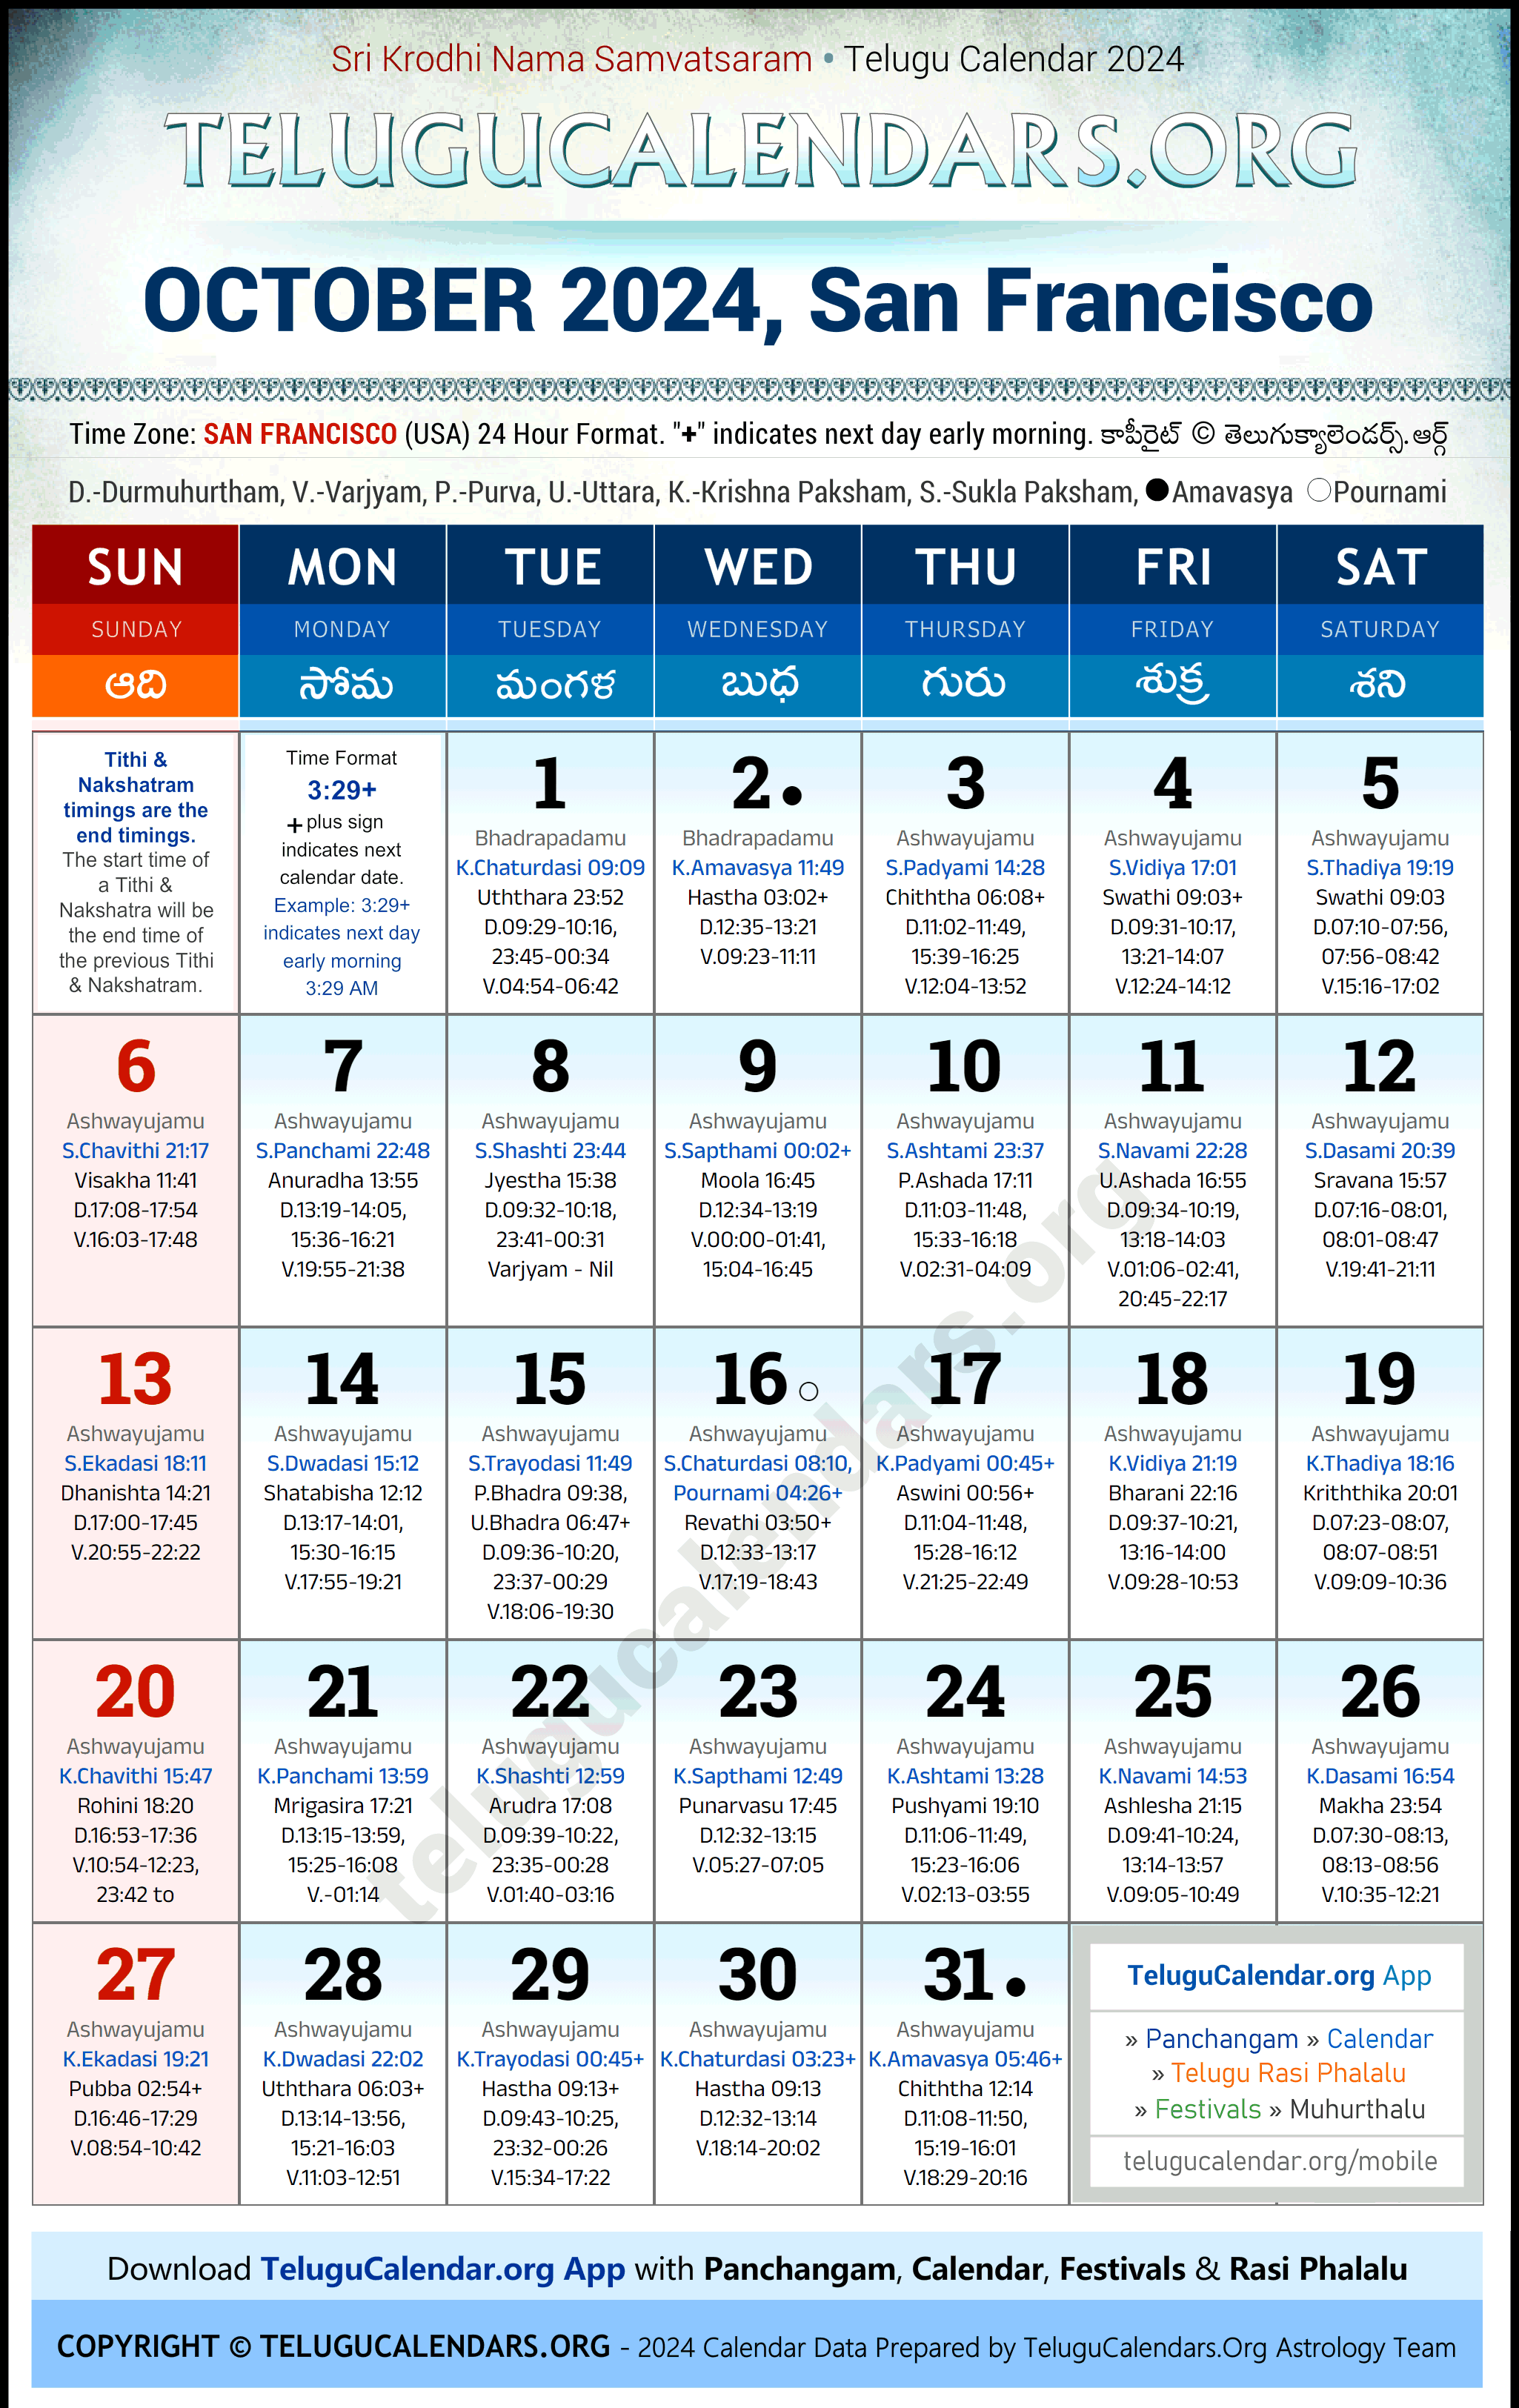 Telugu Calendar 2024 October Festivals for San Francisco